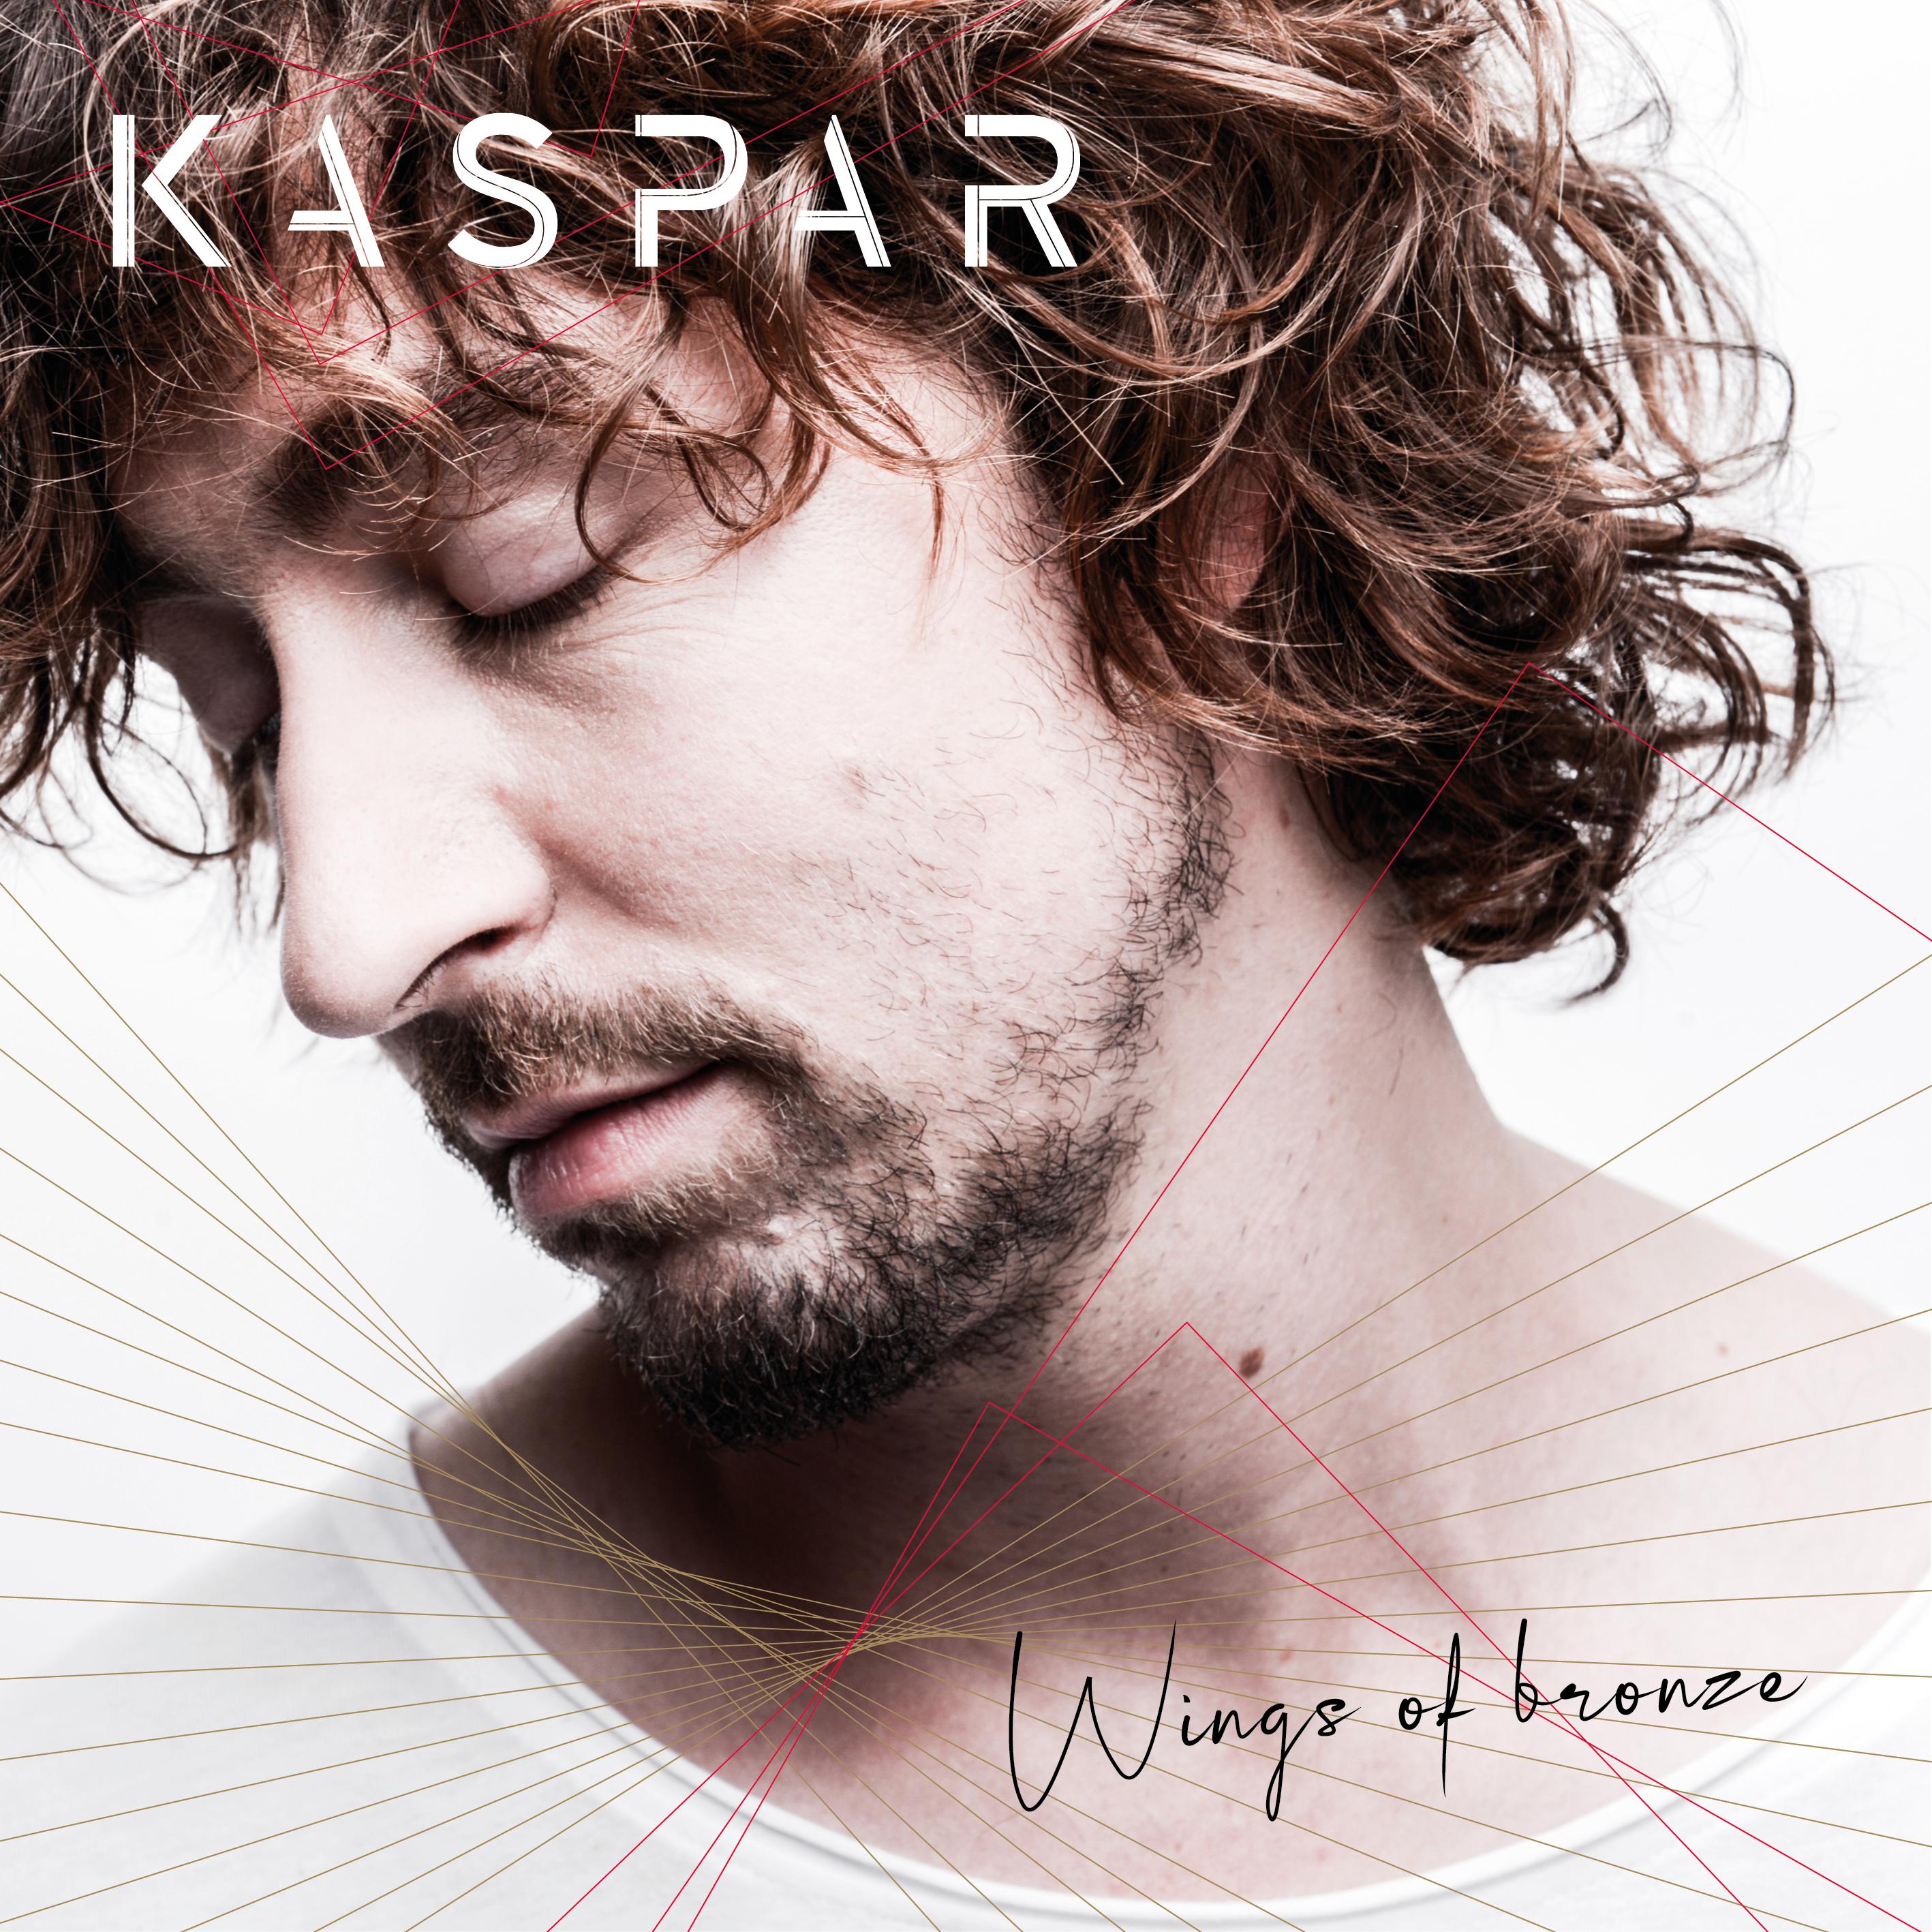 Kaspar - Wings of bronze